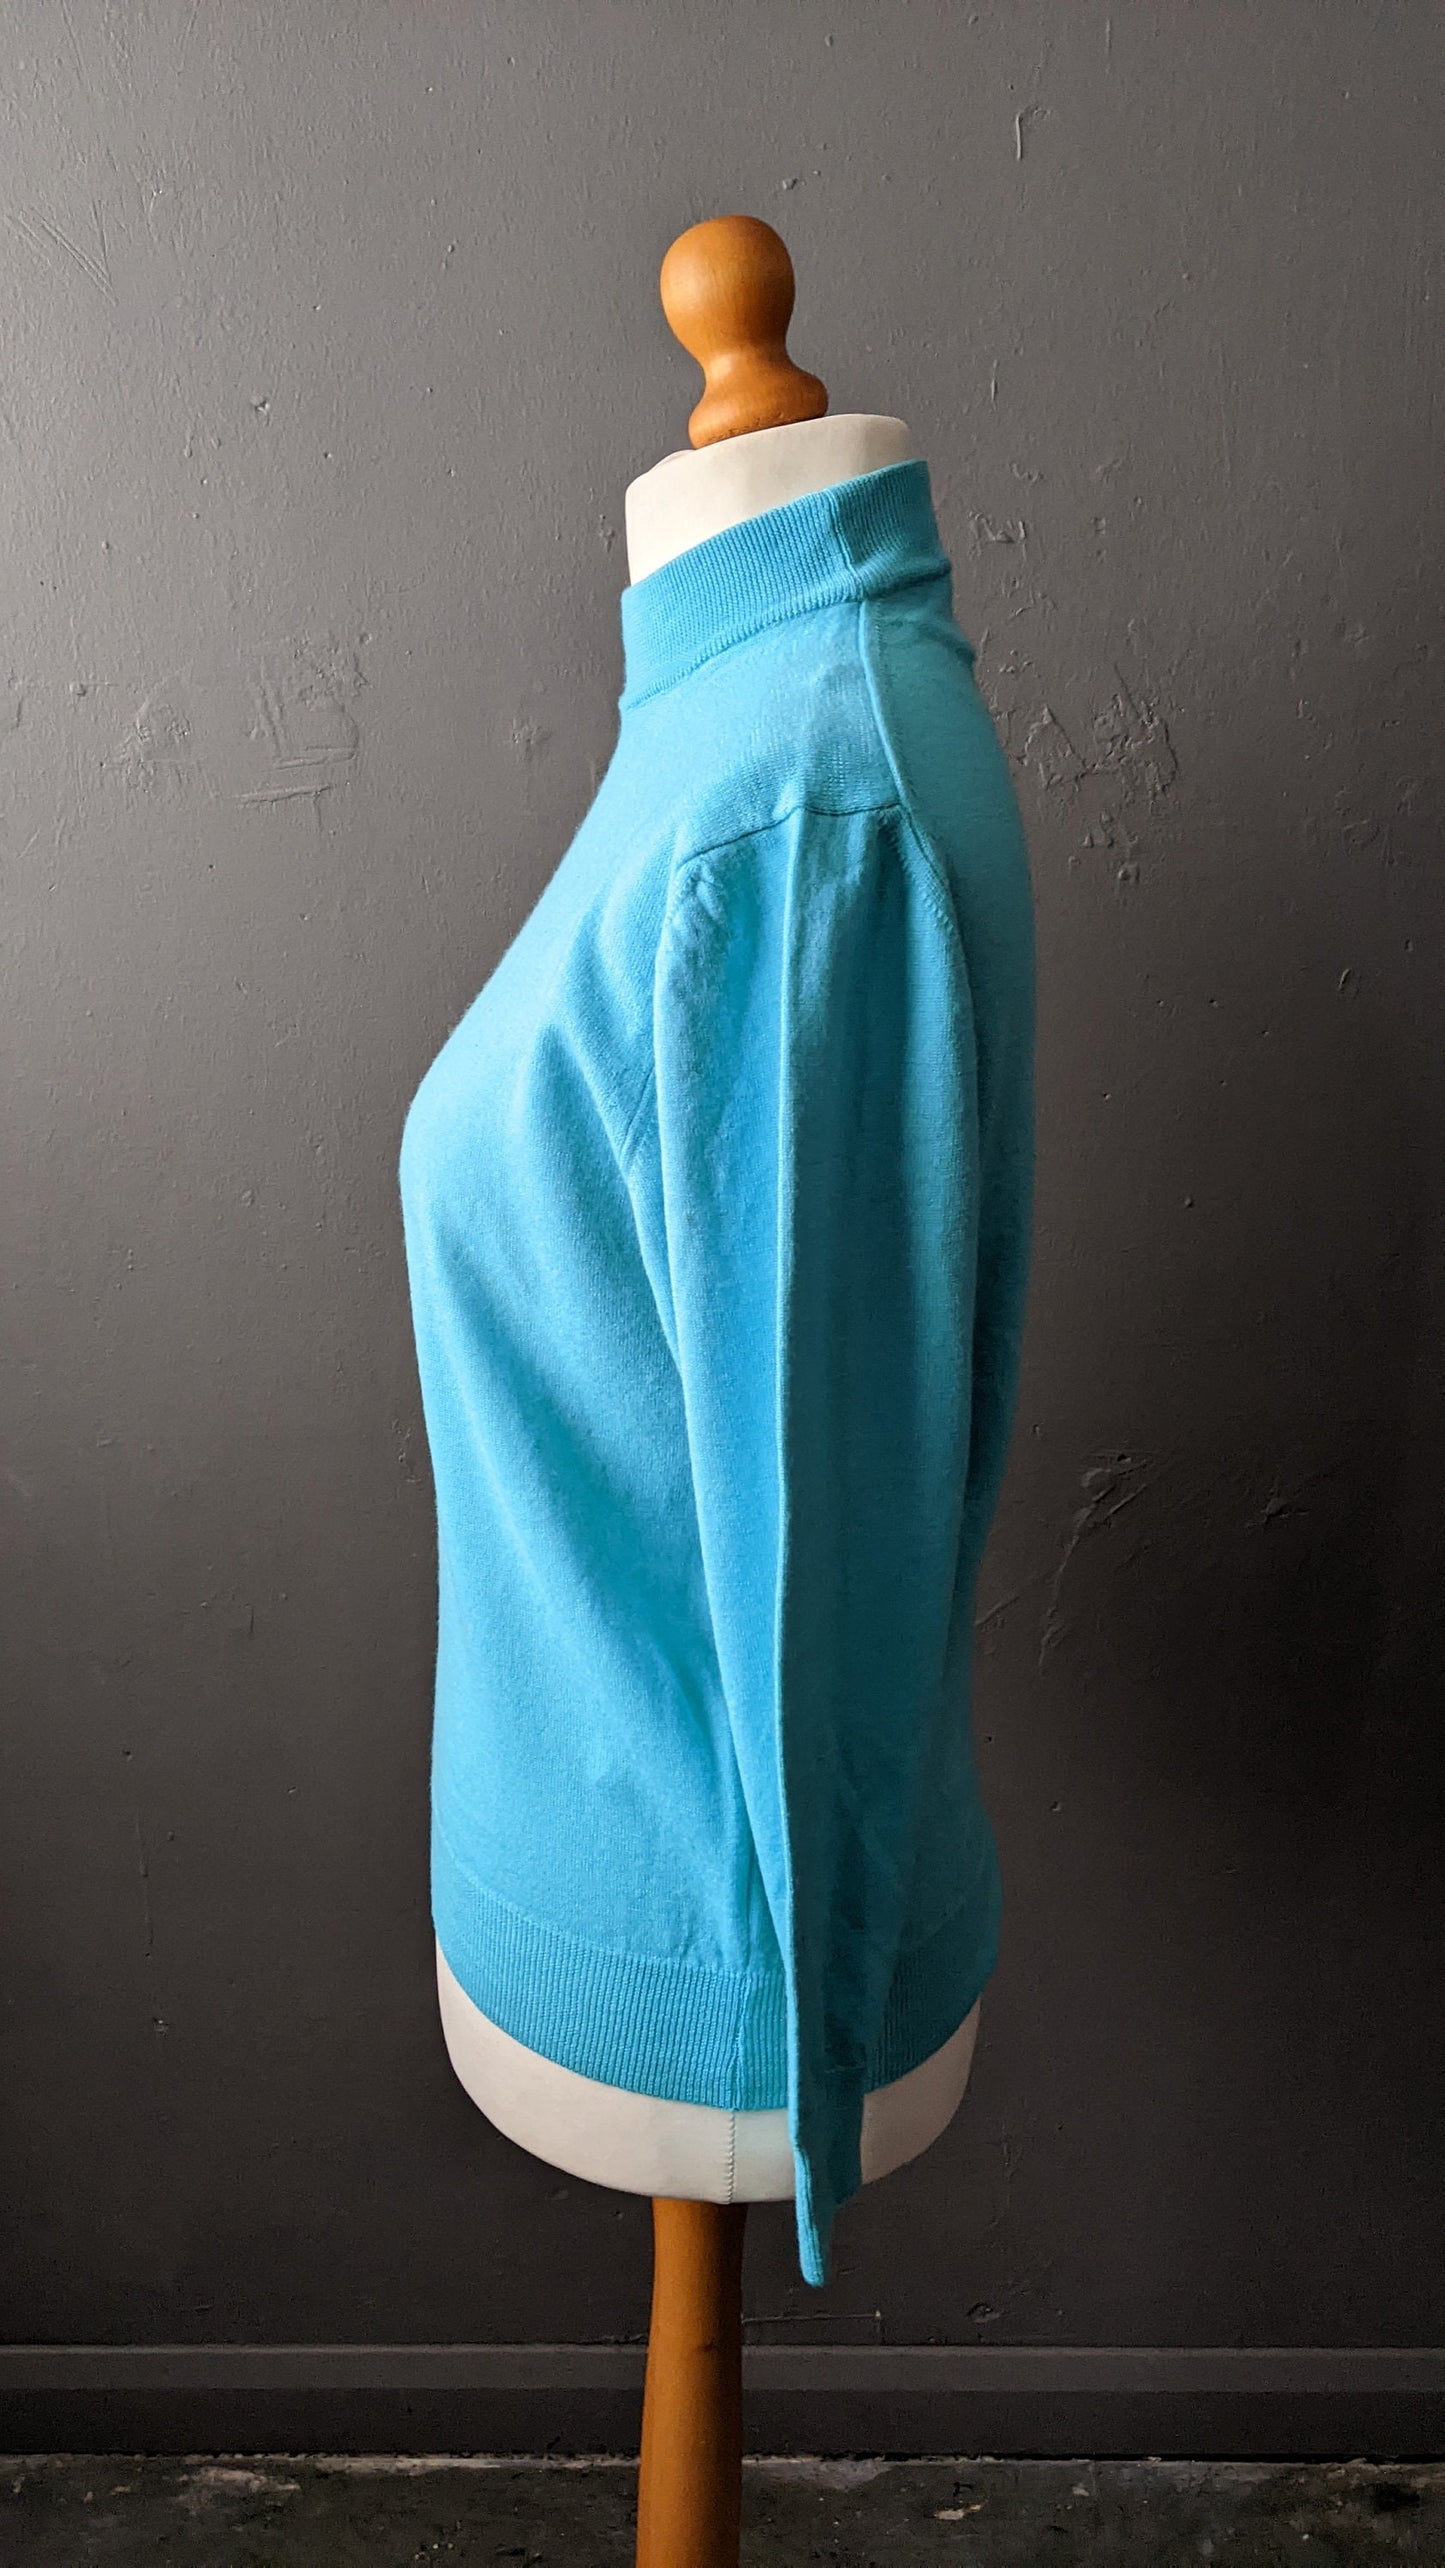 90s Aqua Blue High Neck Jumper, Wool Blend Pullover, Size Medium Large